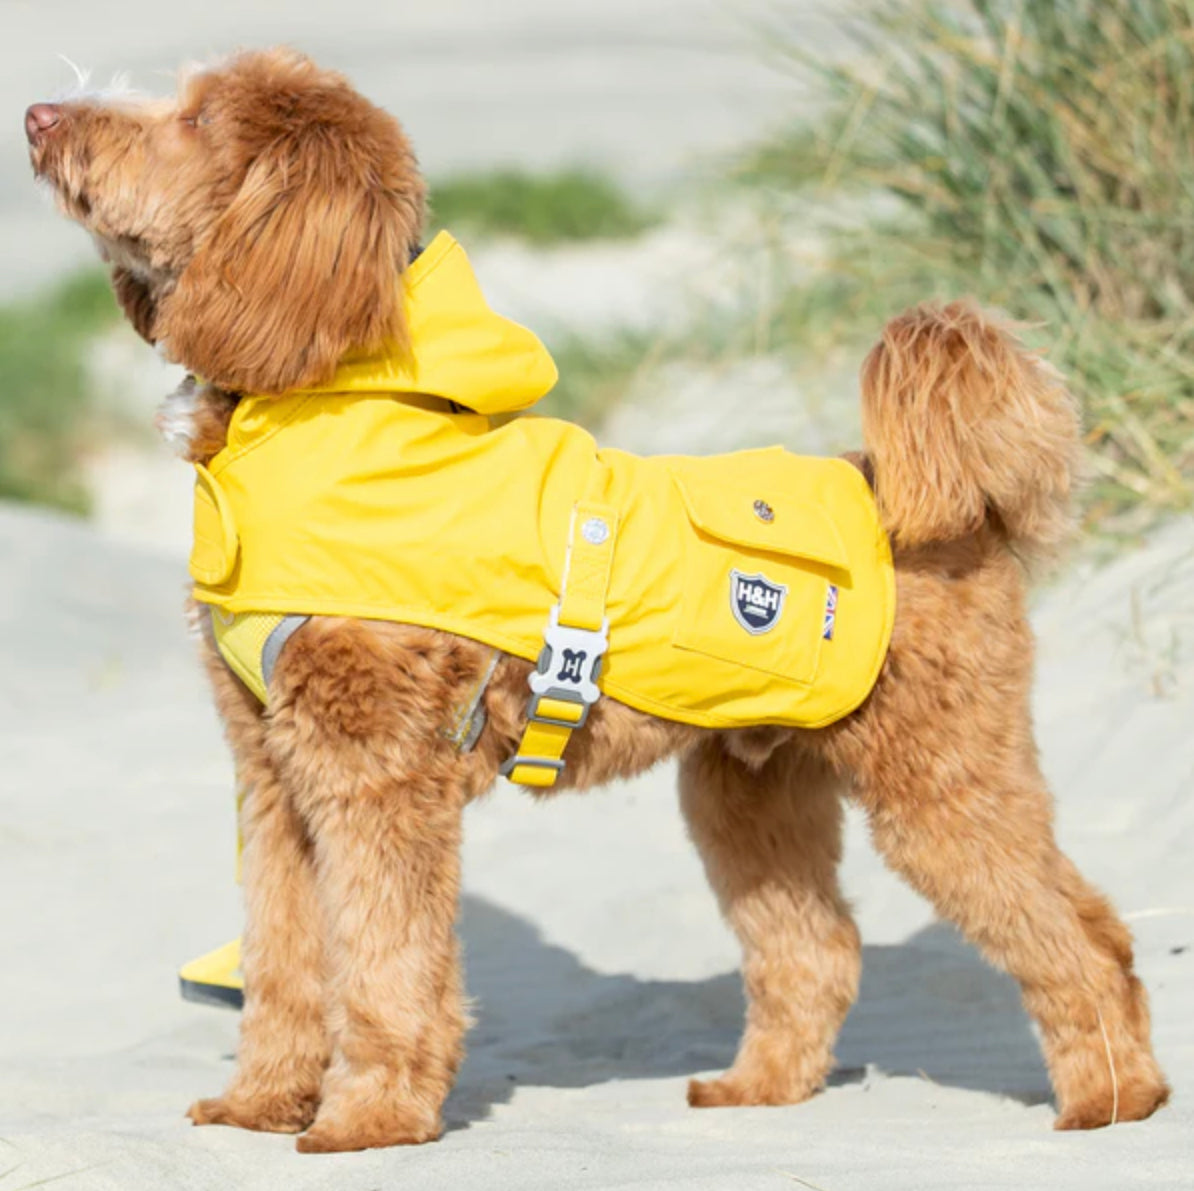 Raincoat - Yellow